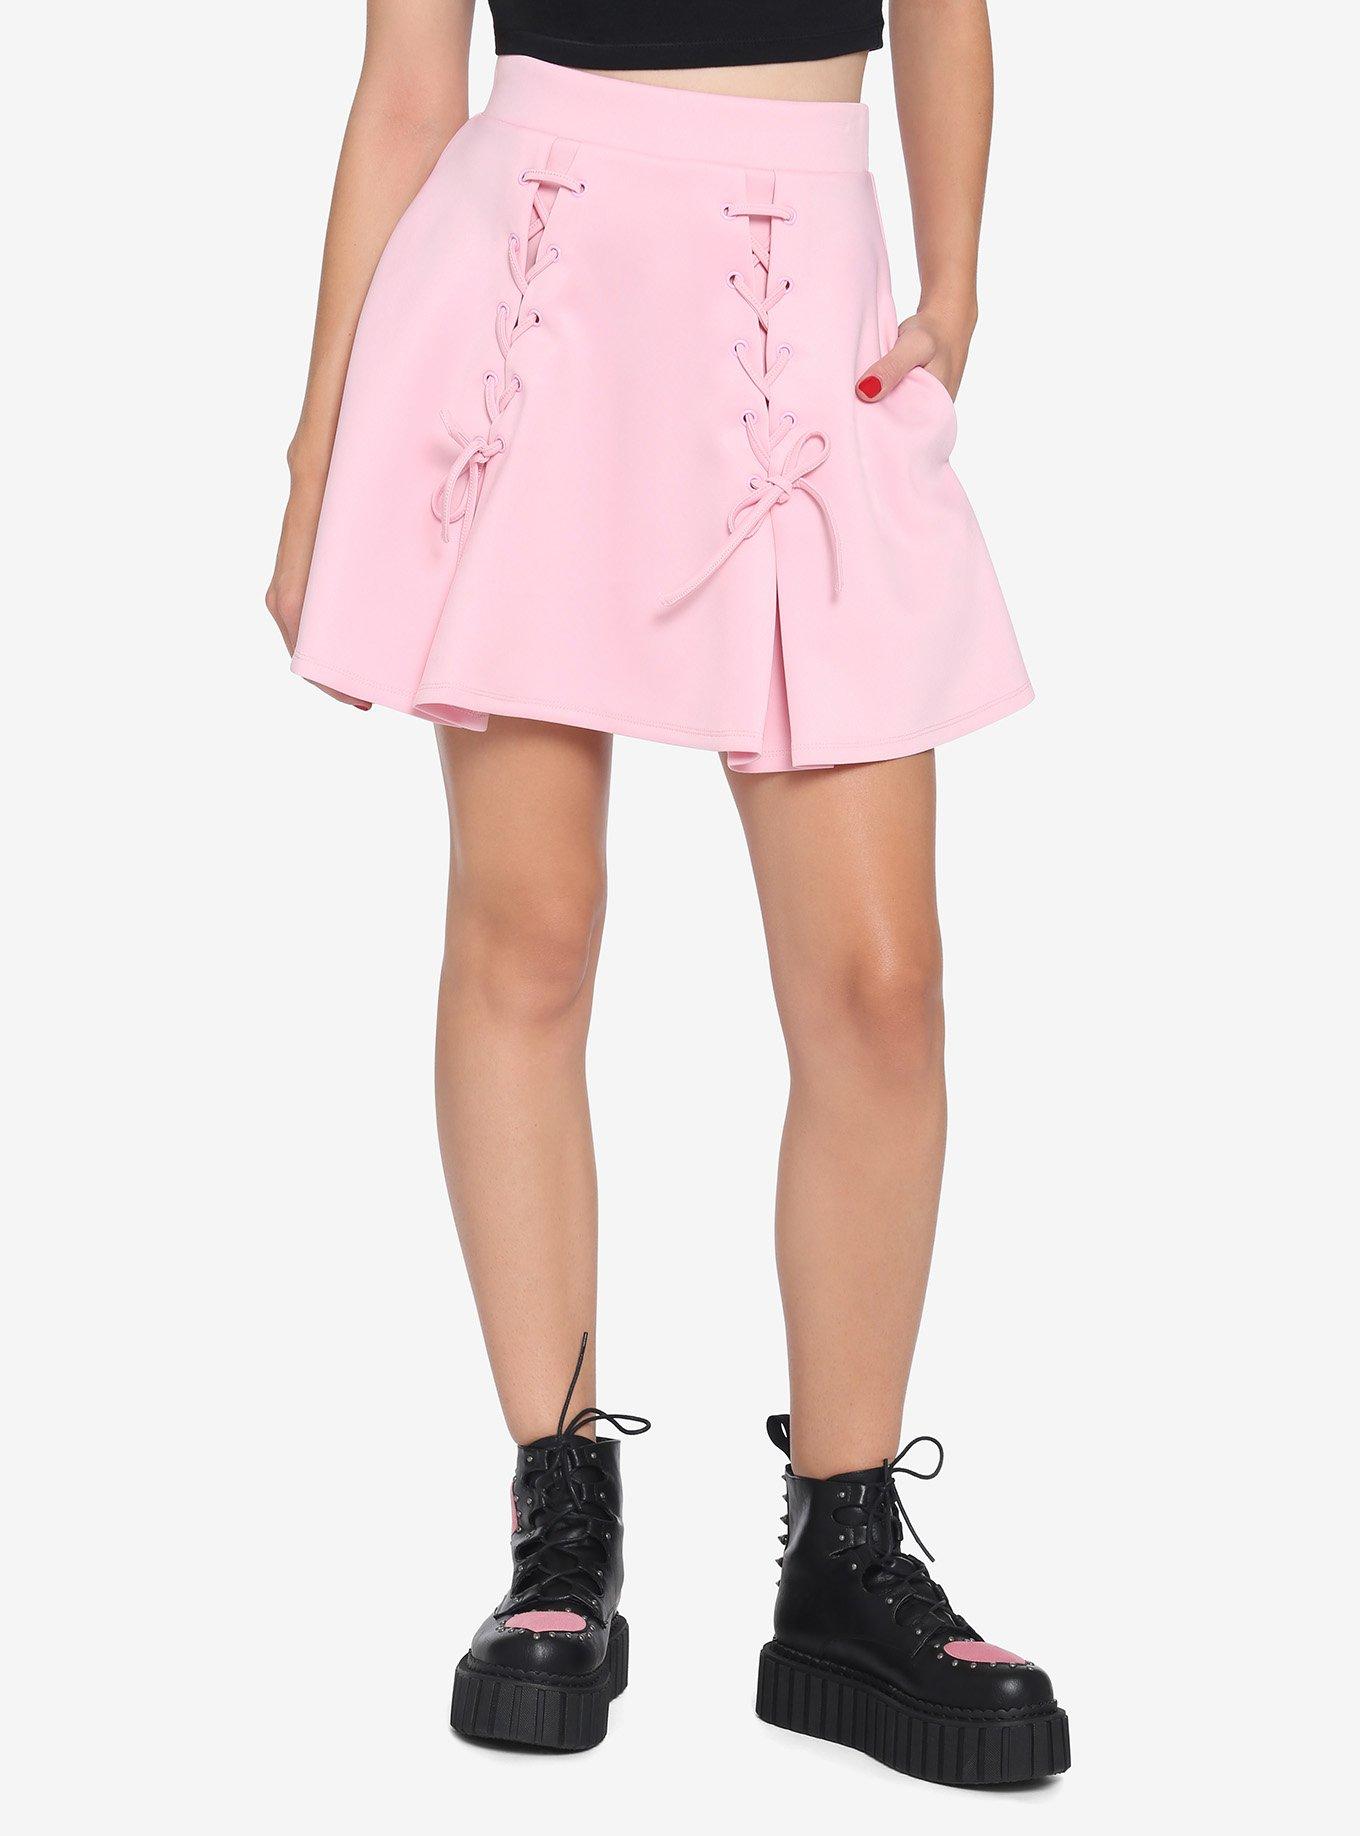 Pastel Pink Lace-Up Skirt, PINK, hi-res